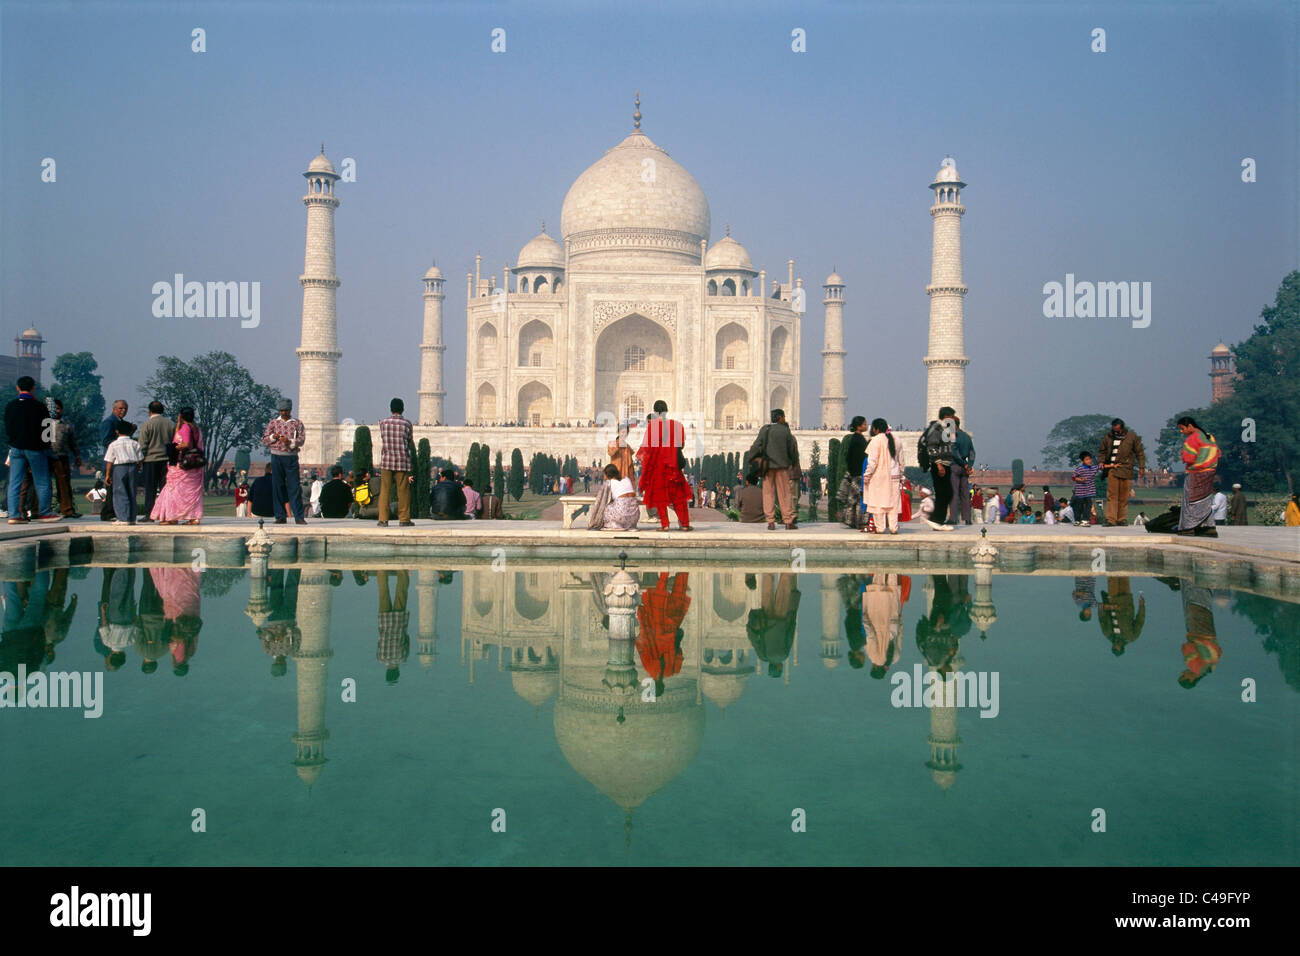 Photograph of the Taj Mahal in India Stock Photo